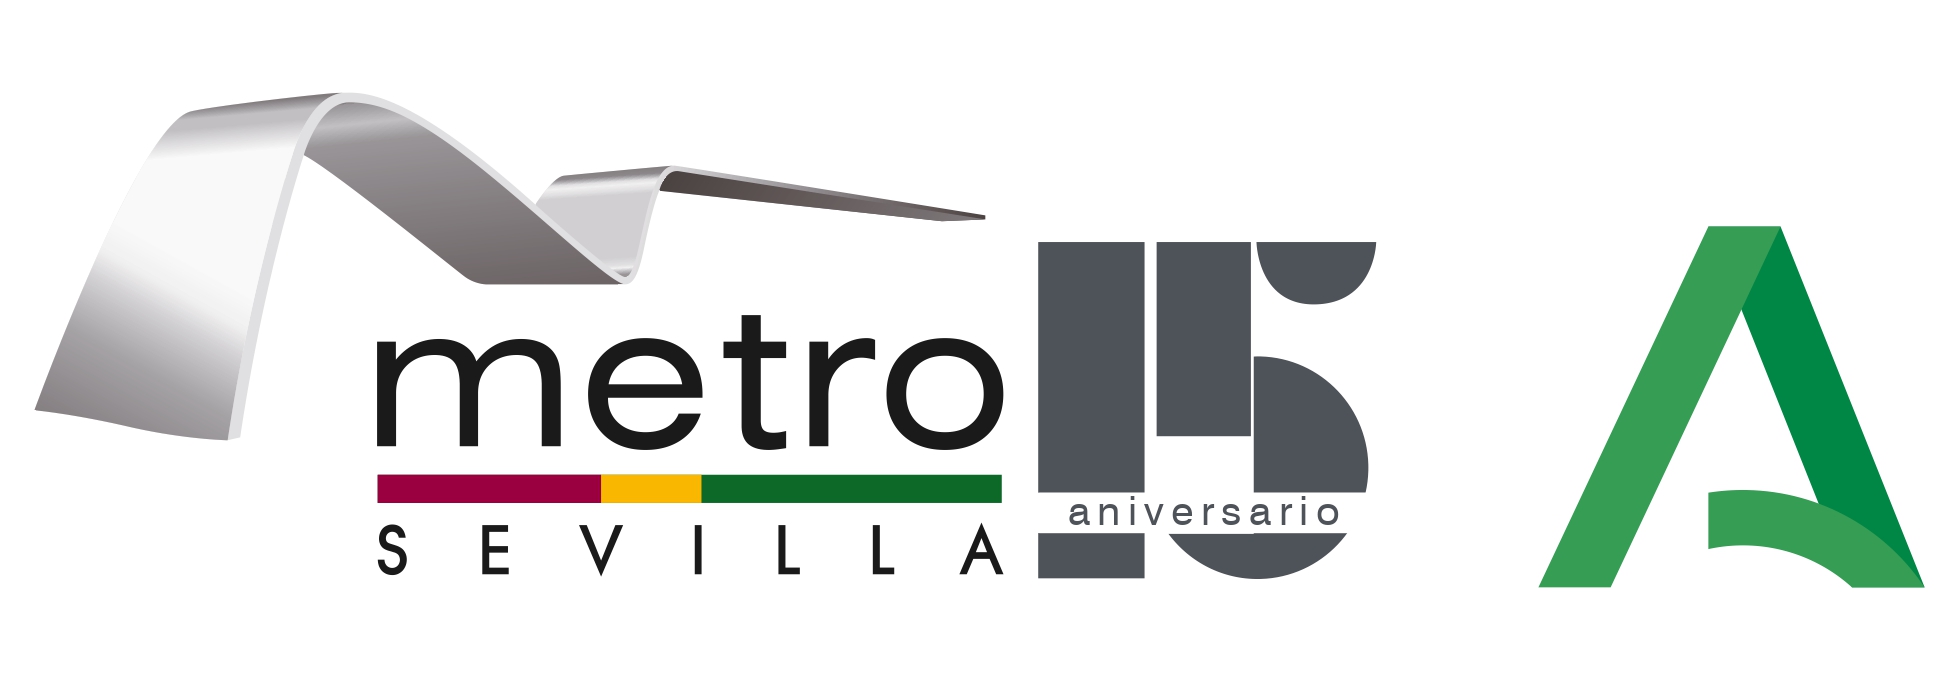 Logo 15A Metro_page-0001